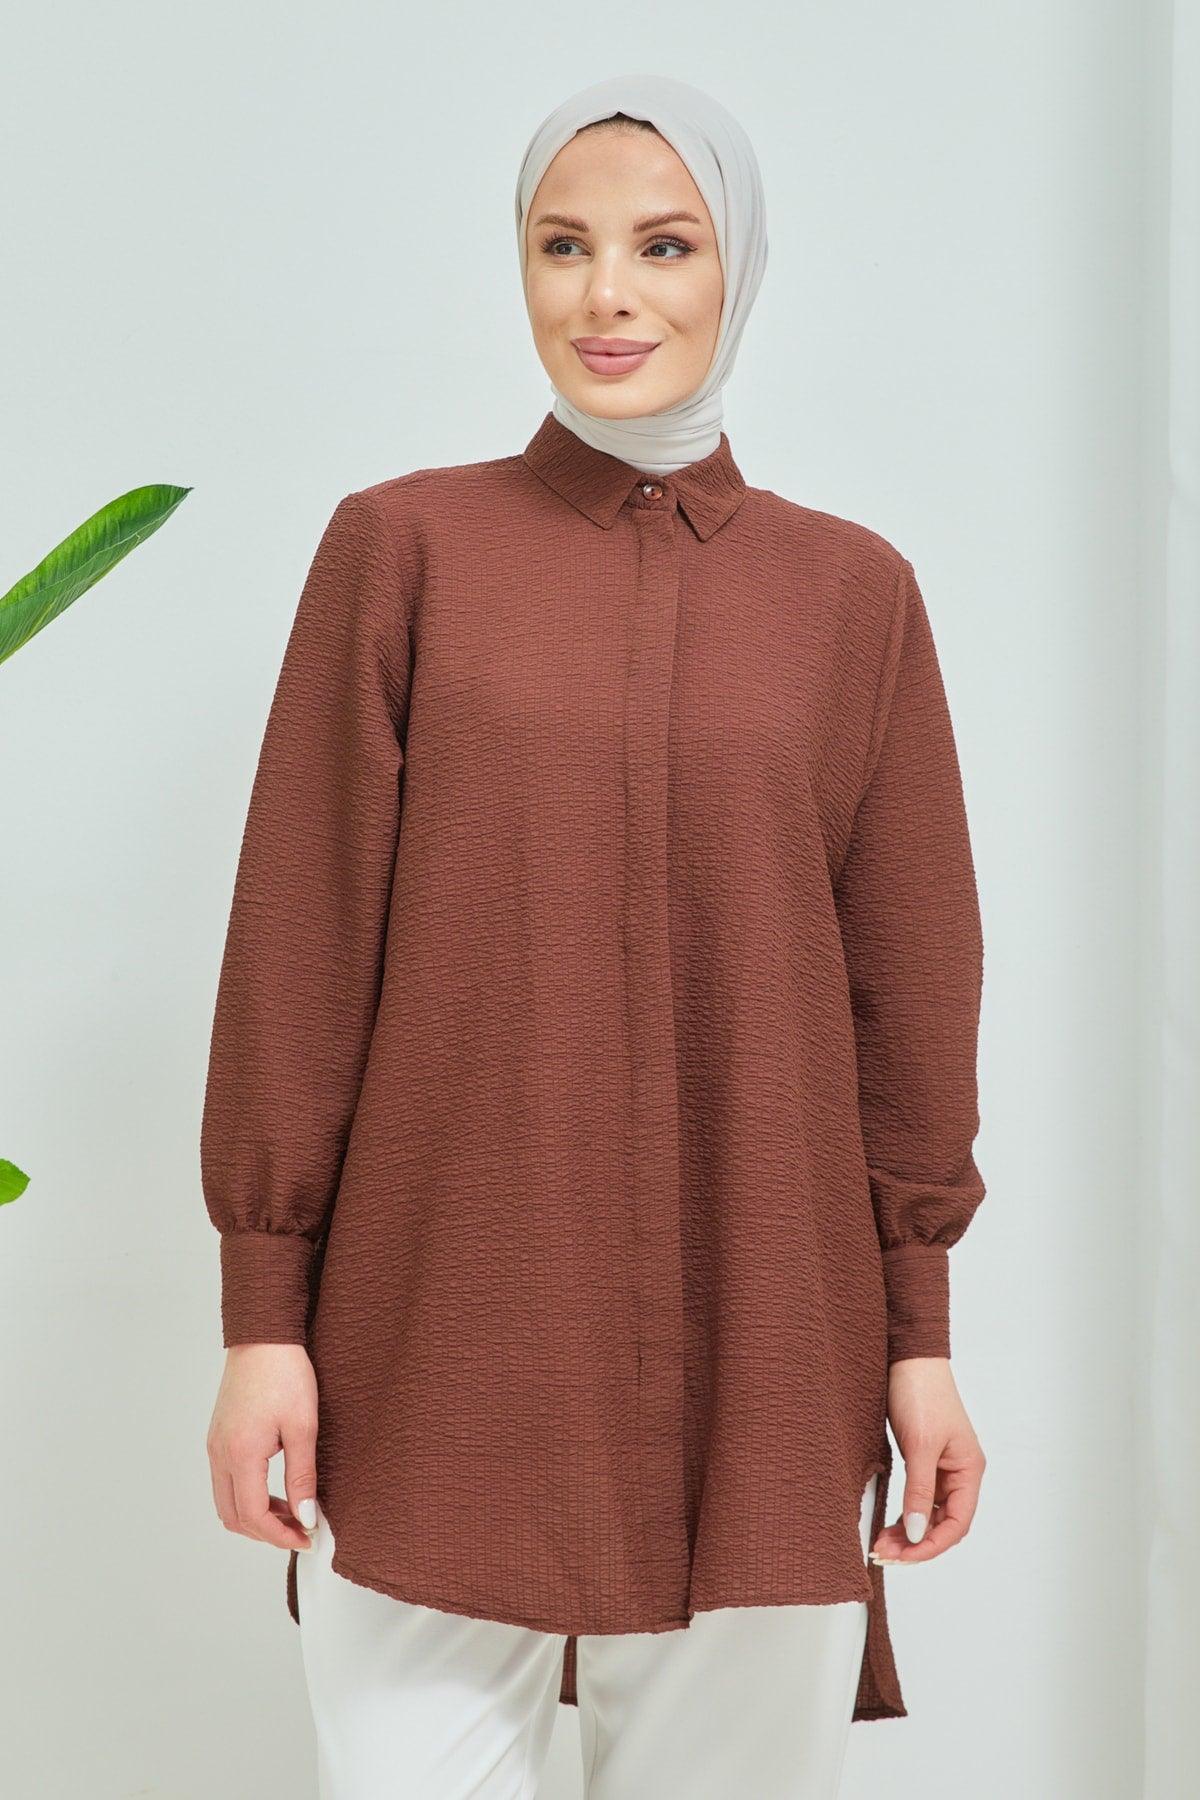 Women's Hijab Oversize See-through Shirt - Swordslife